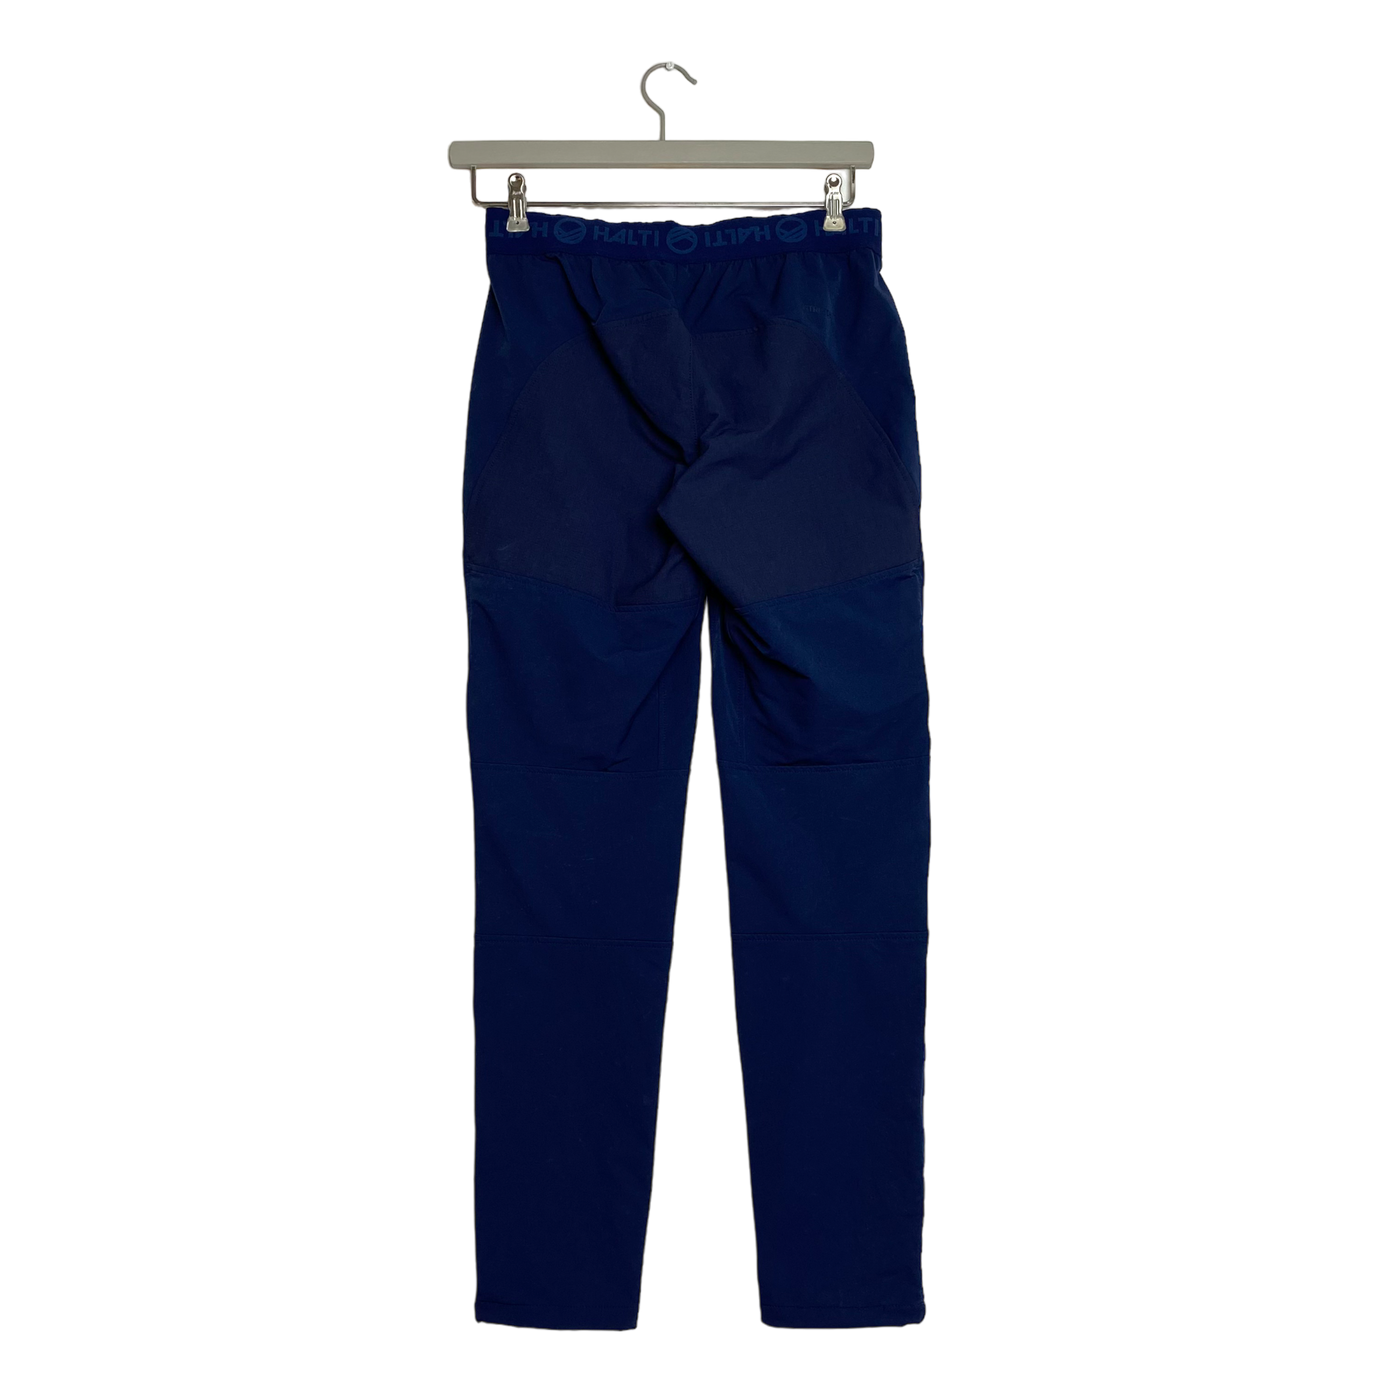 Halti Pallas x-stretch pants, midnight blue | woman 36